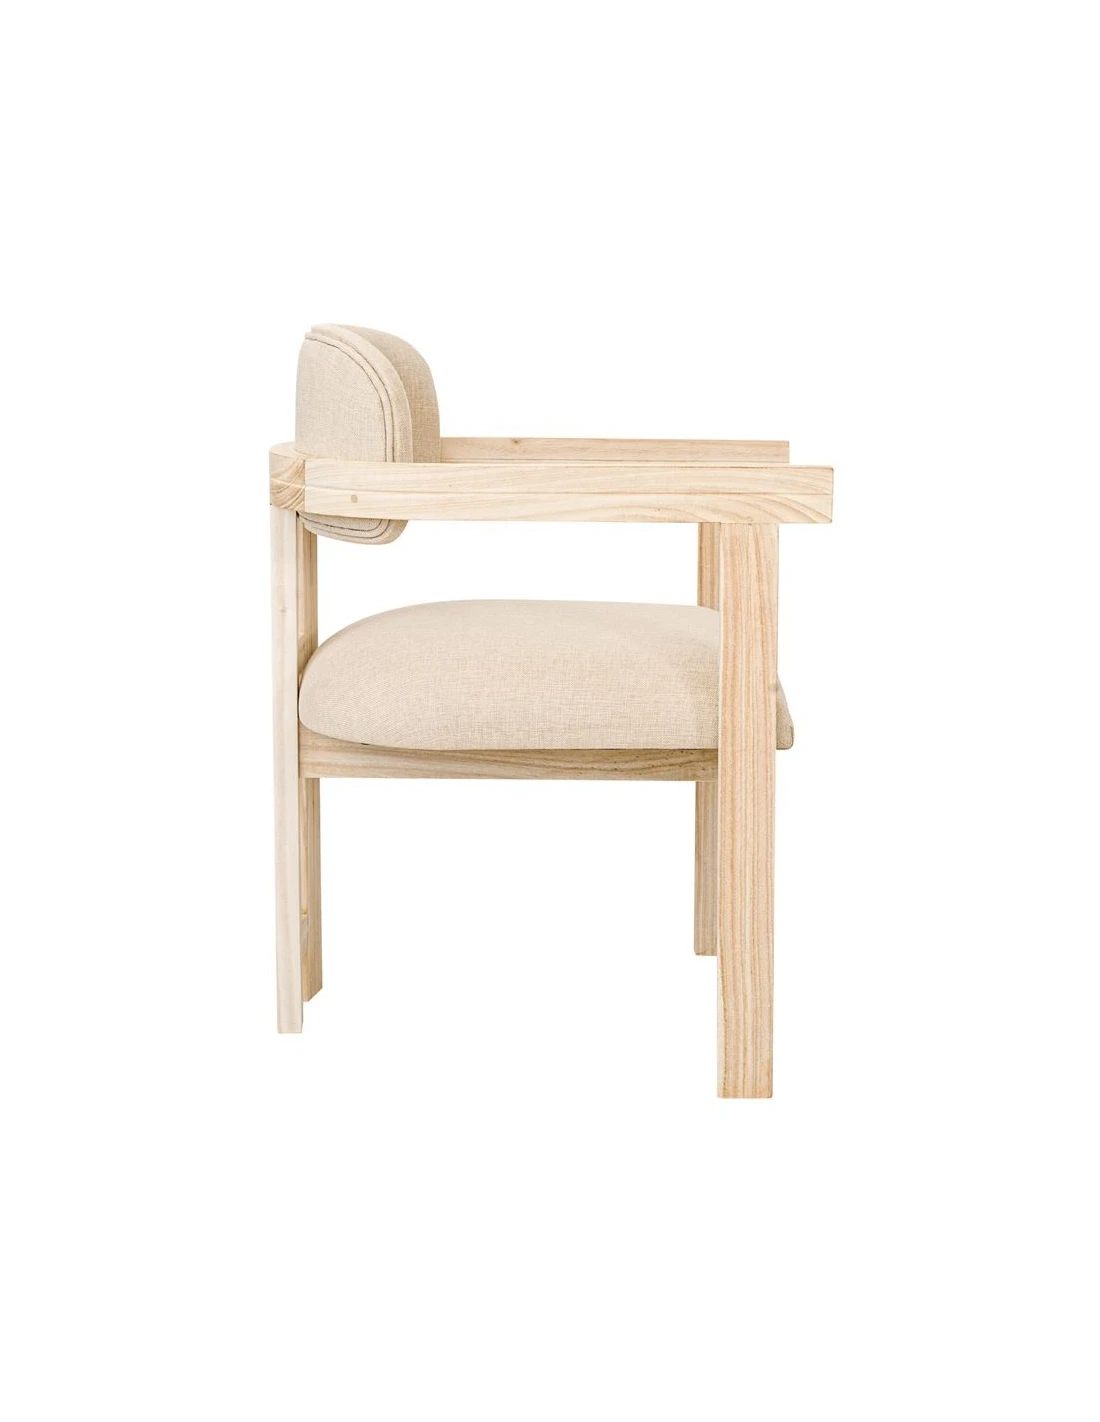 Dining chair Iesla mindi wood - beige